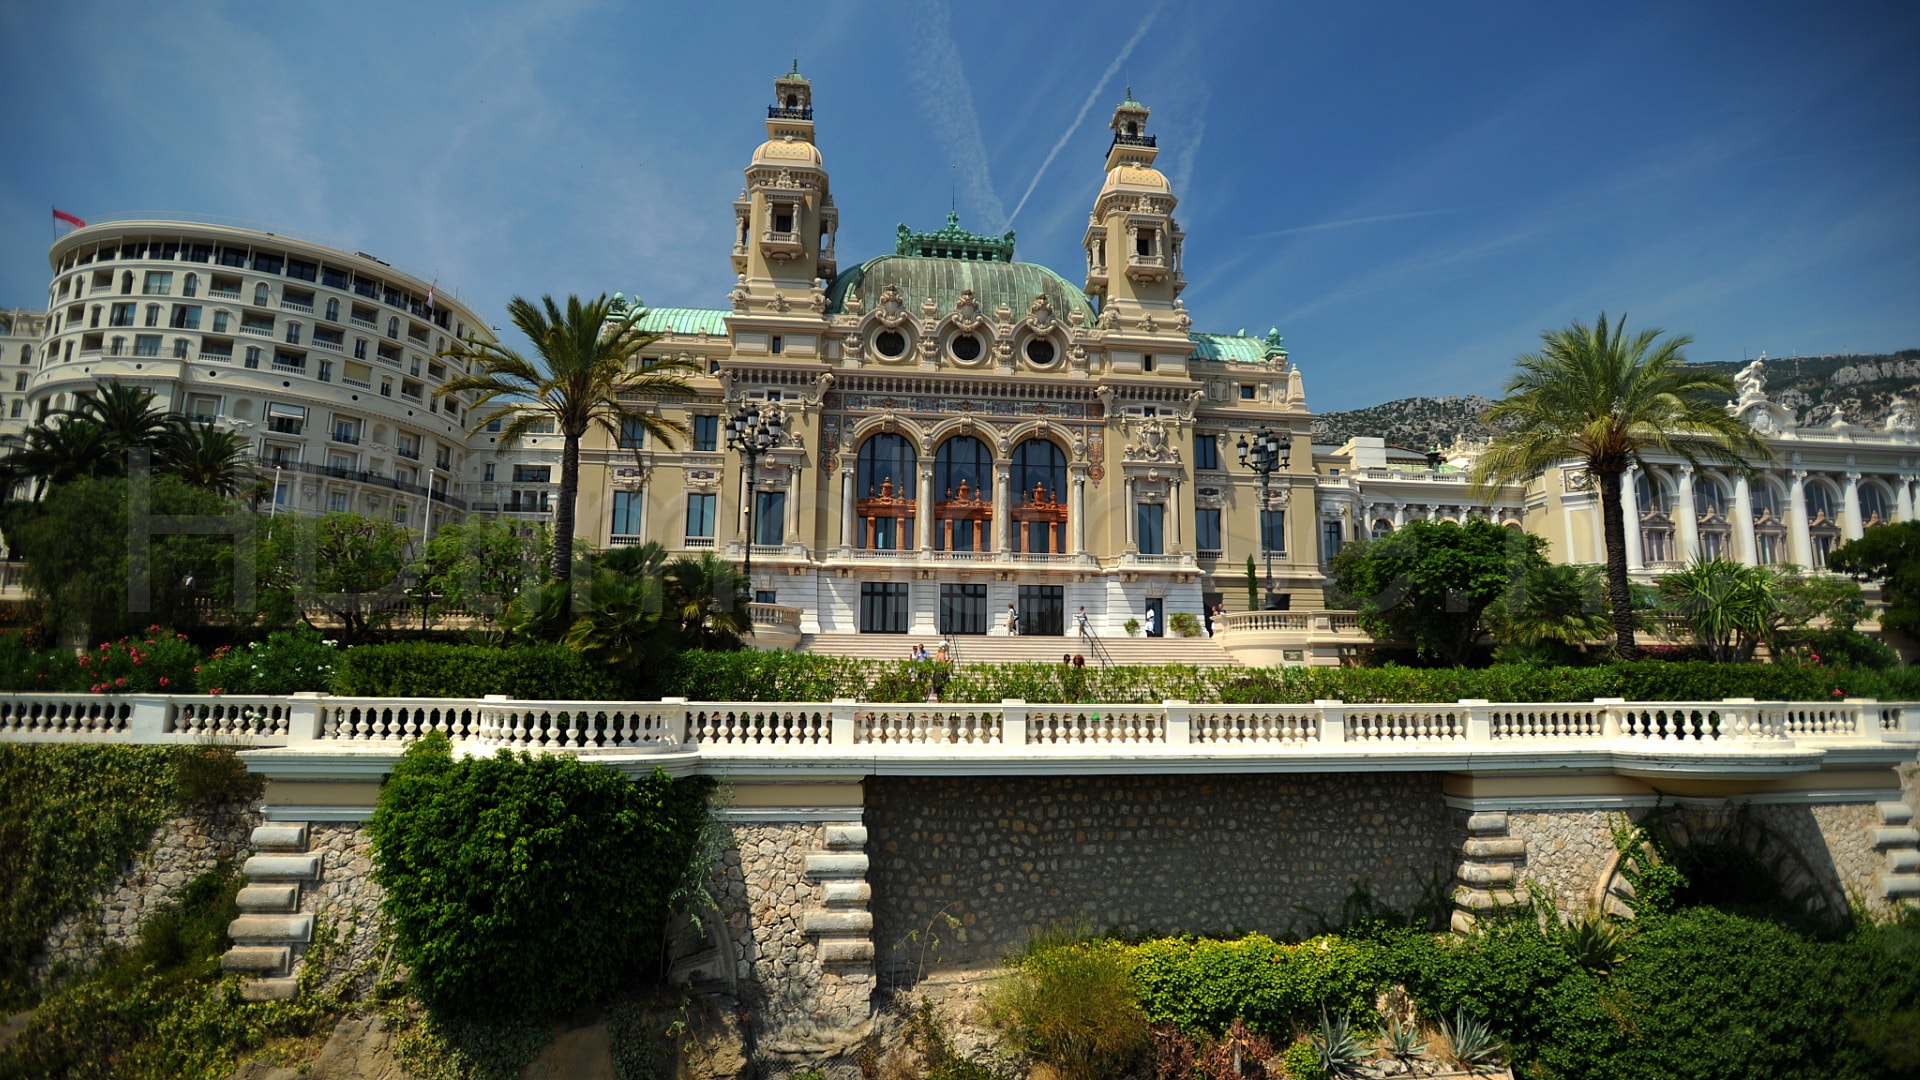 Hotel De Paris Monaco - Avalon Events Organisation